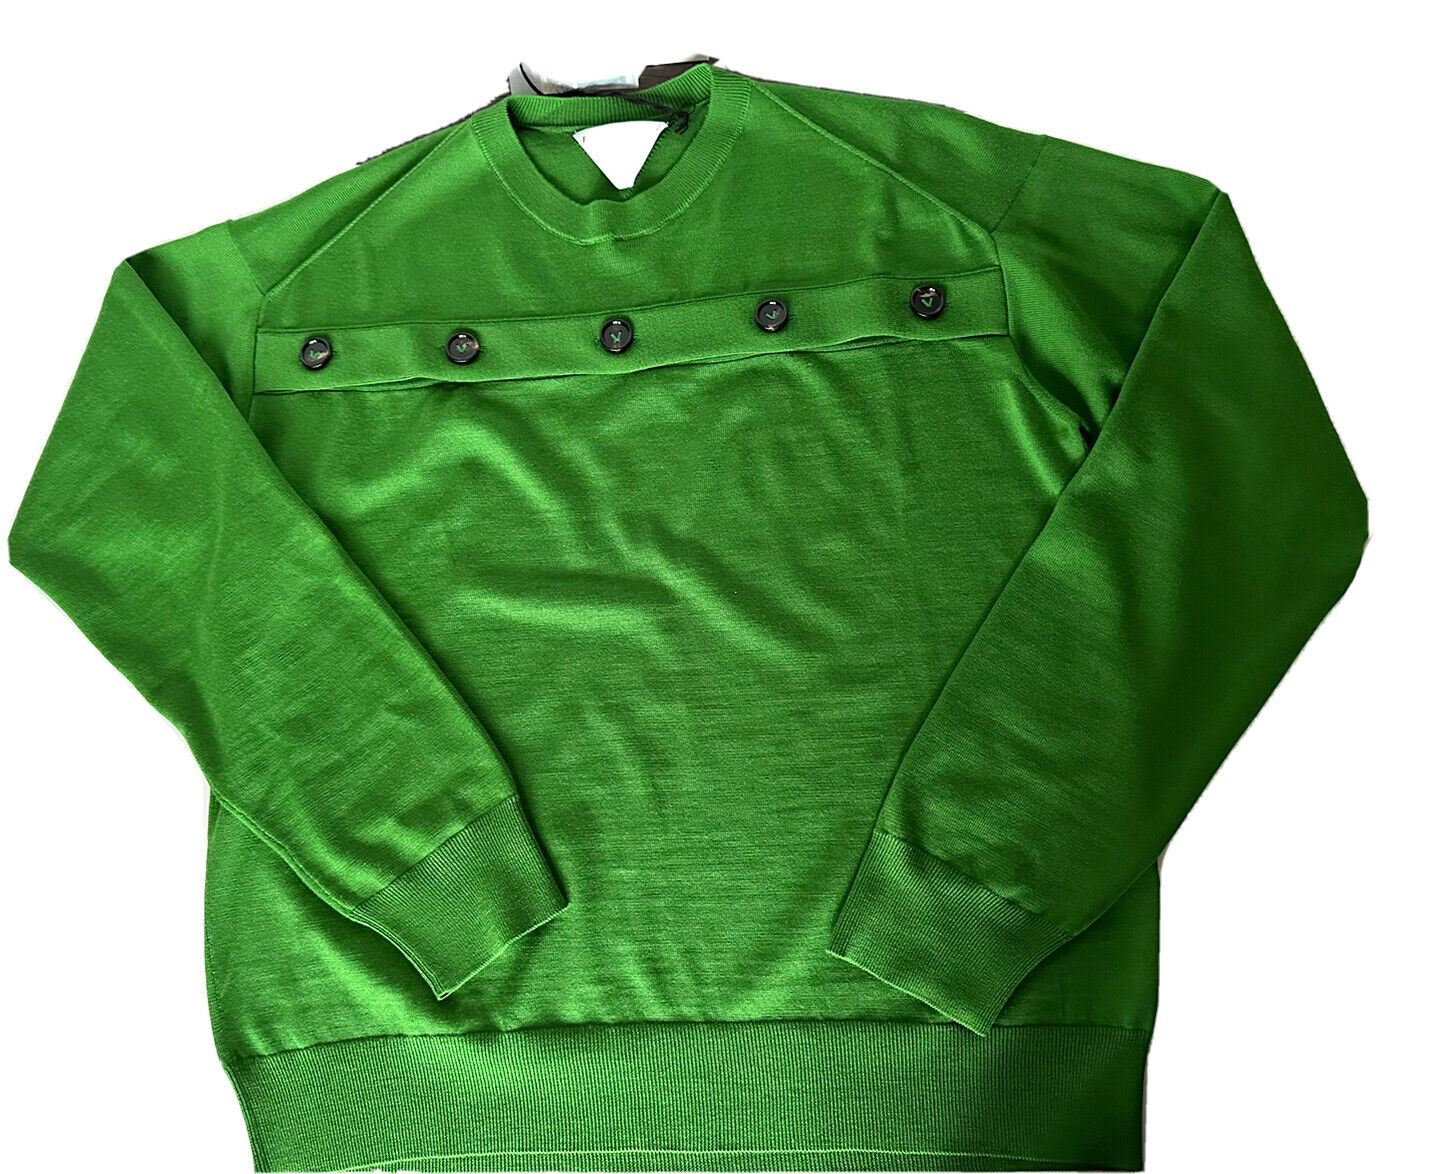 NWT $1750 Bottega Veneta Women's Green Wool Open Button Knit Top Medium 648729